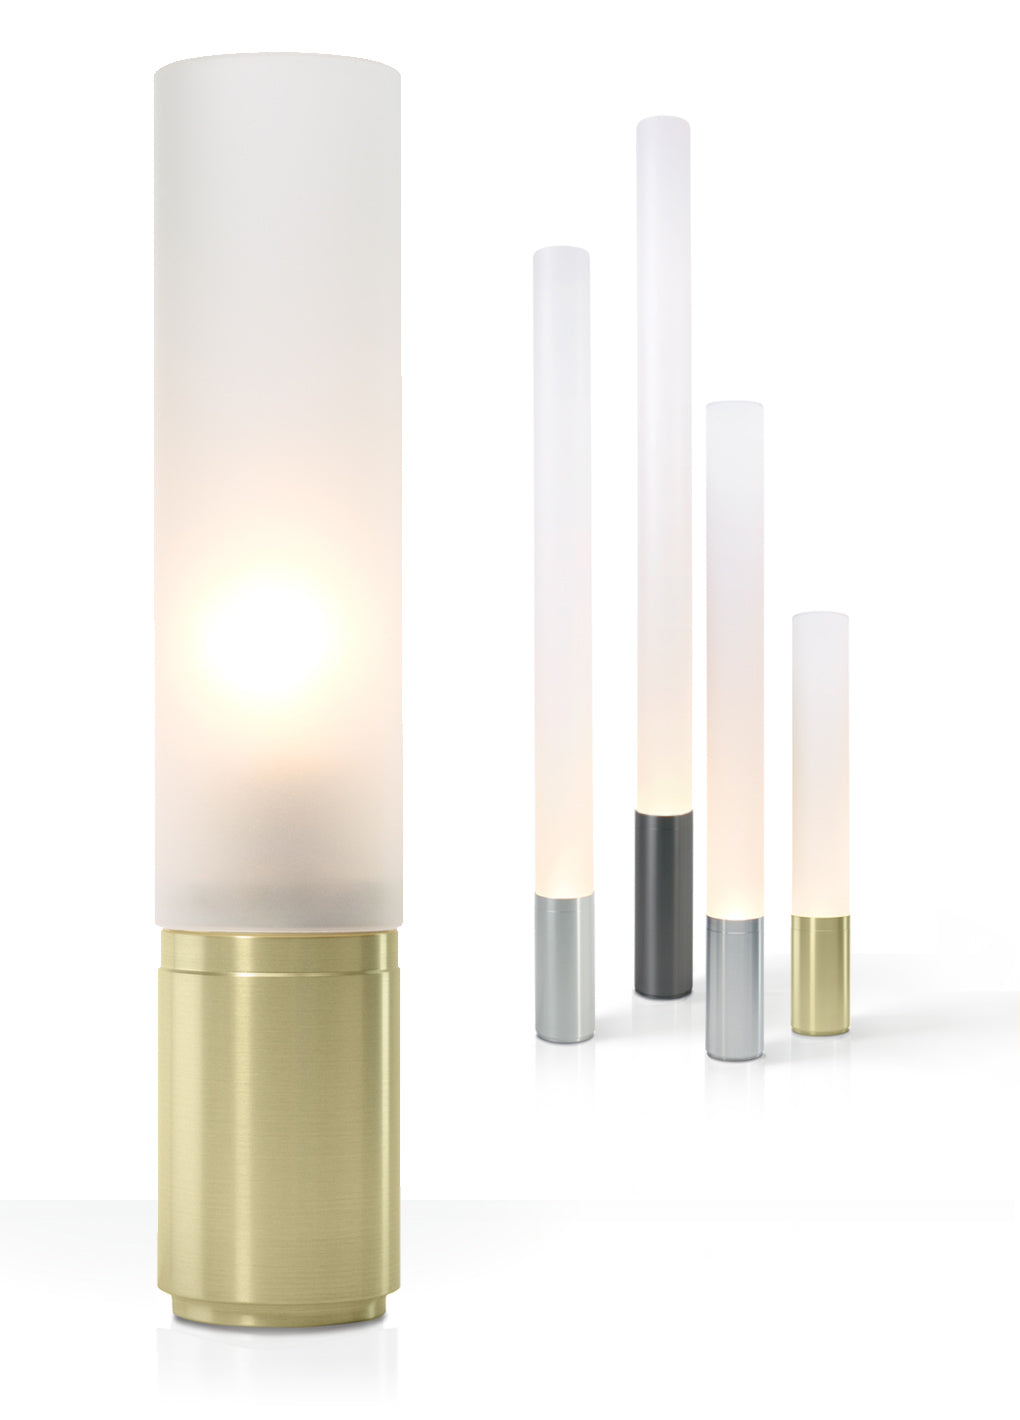 Pablo Design Elise Table Lamp